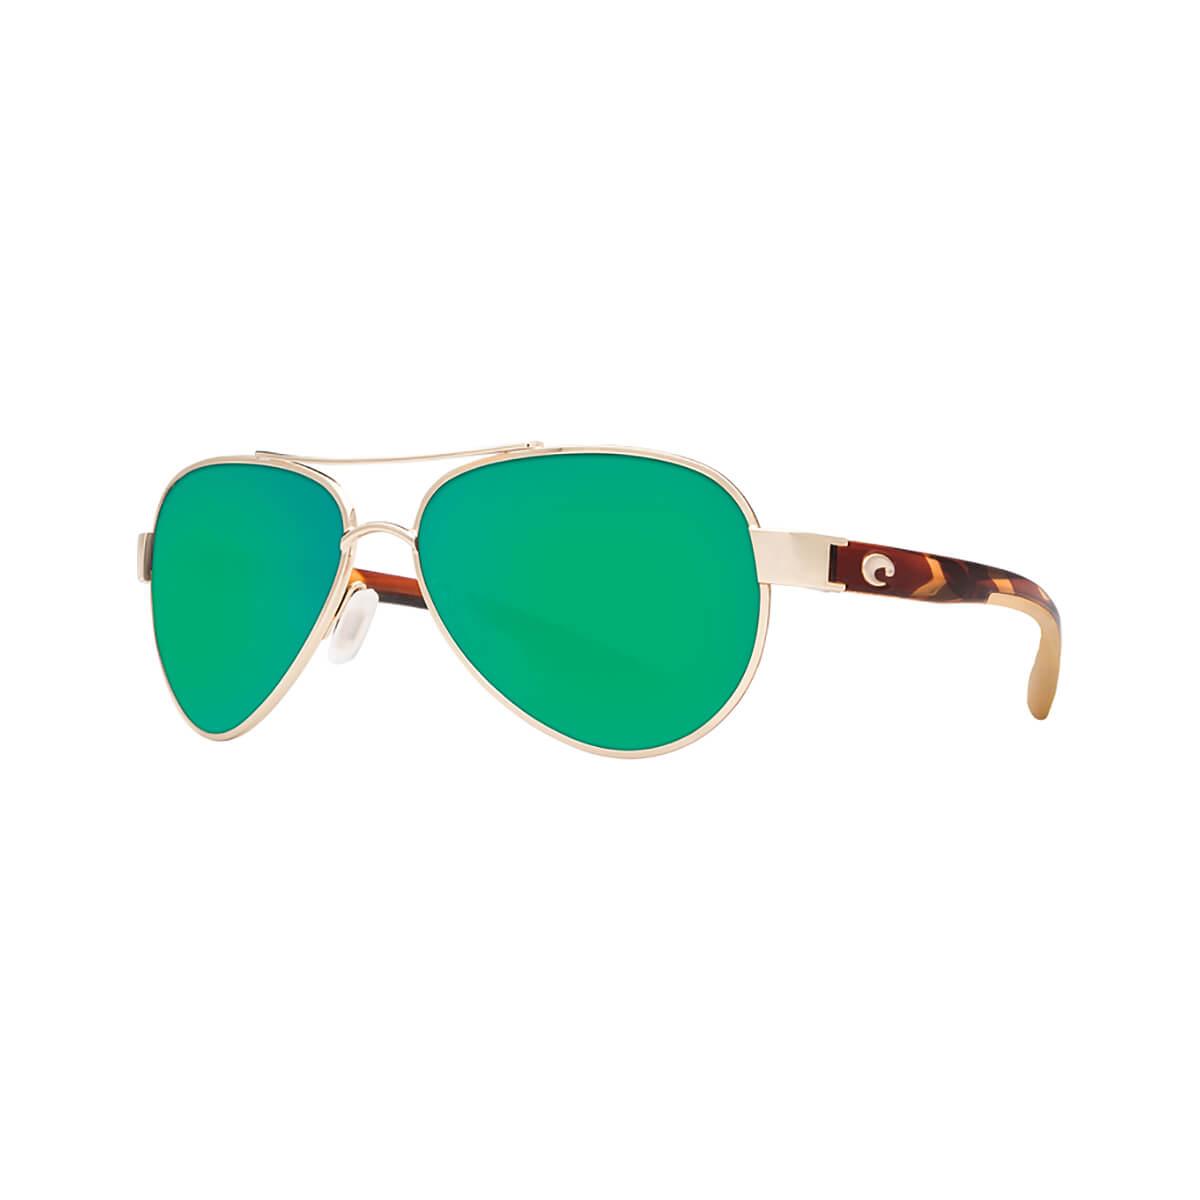  Loreto 580p Sunglasses - Polarized Plastic